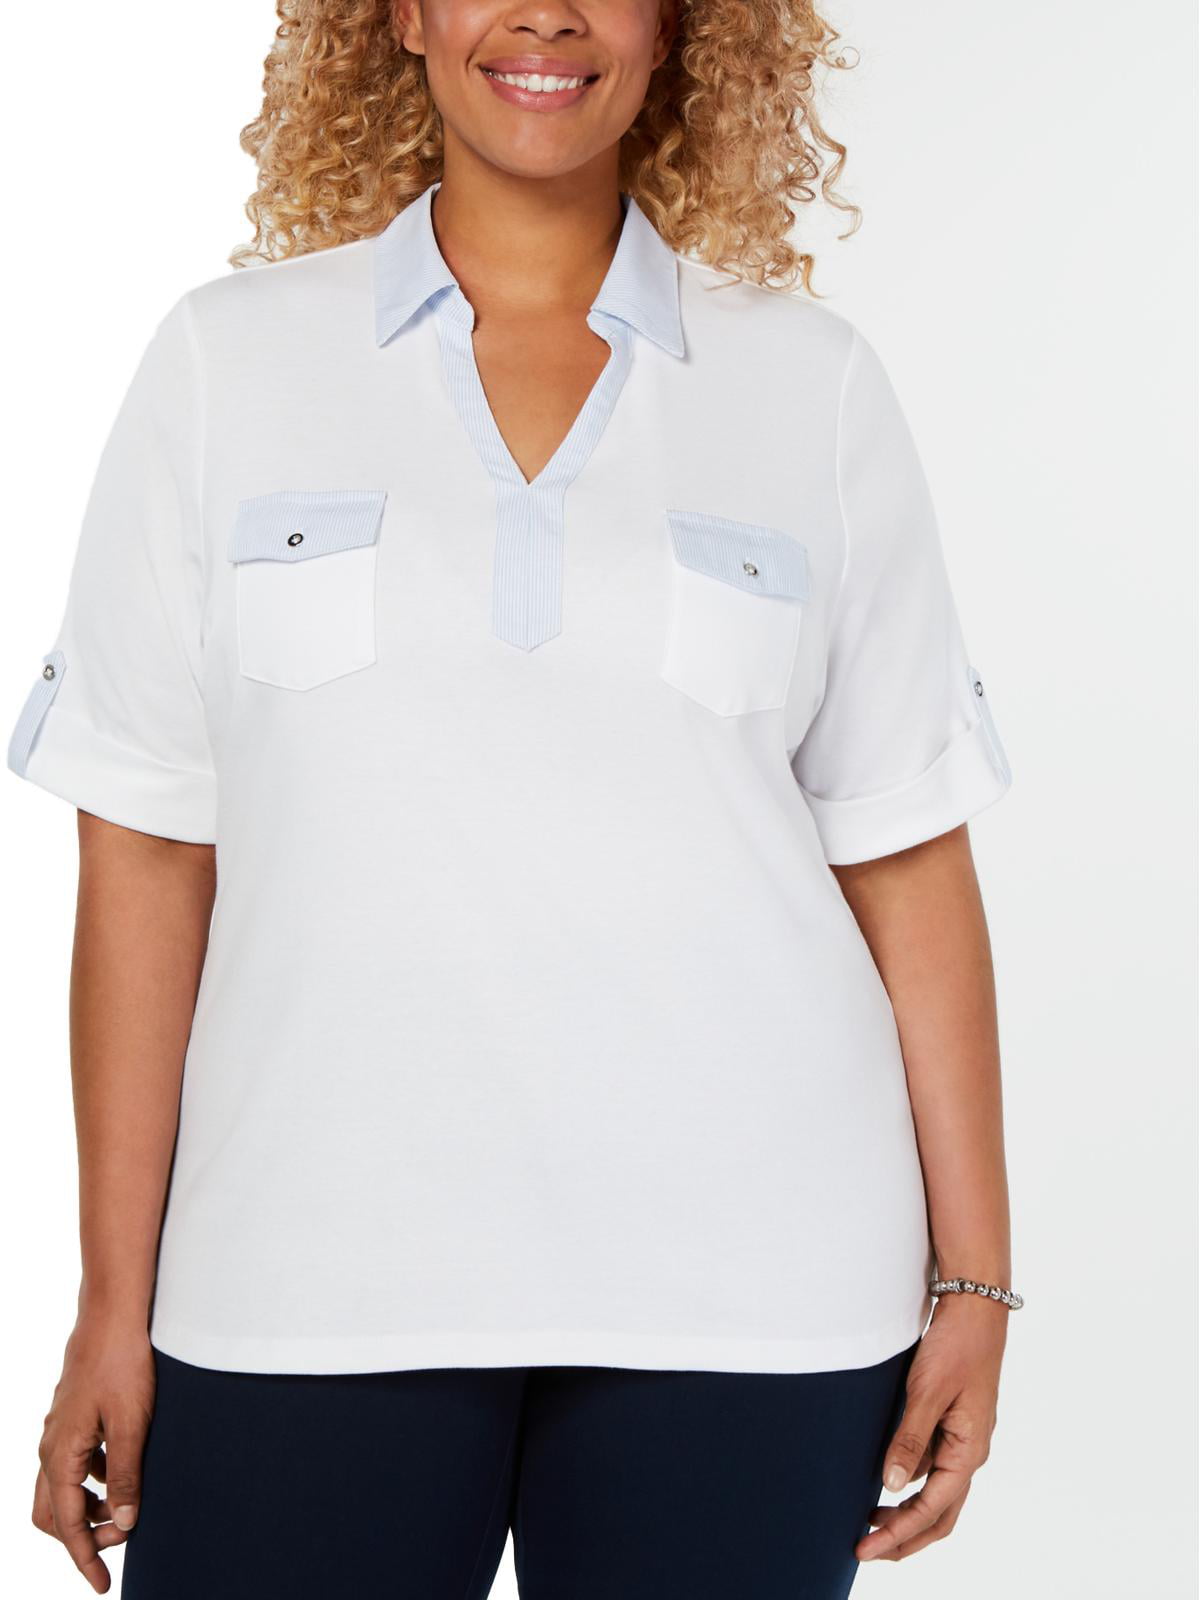 Karen Scott Plus Size 0X,2X,3X Shirt Woman Embroidered Striped Button Down Shirt 